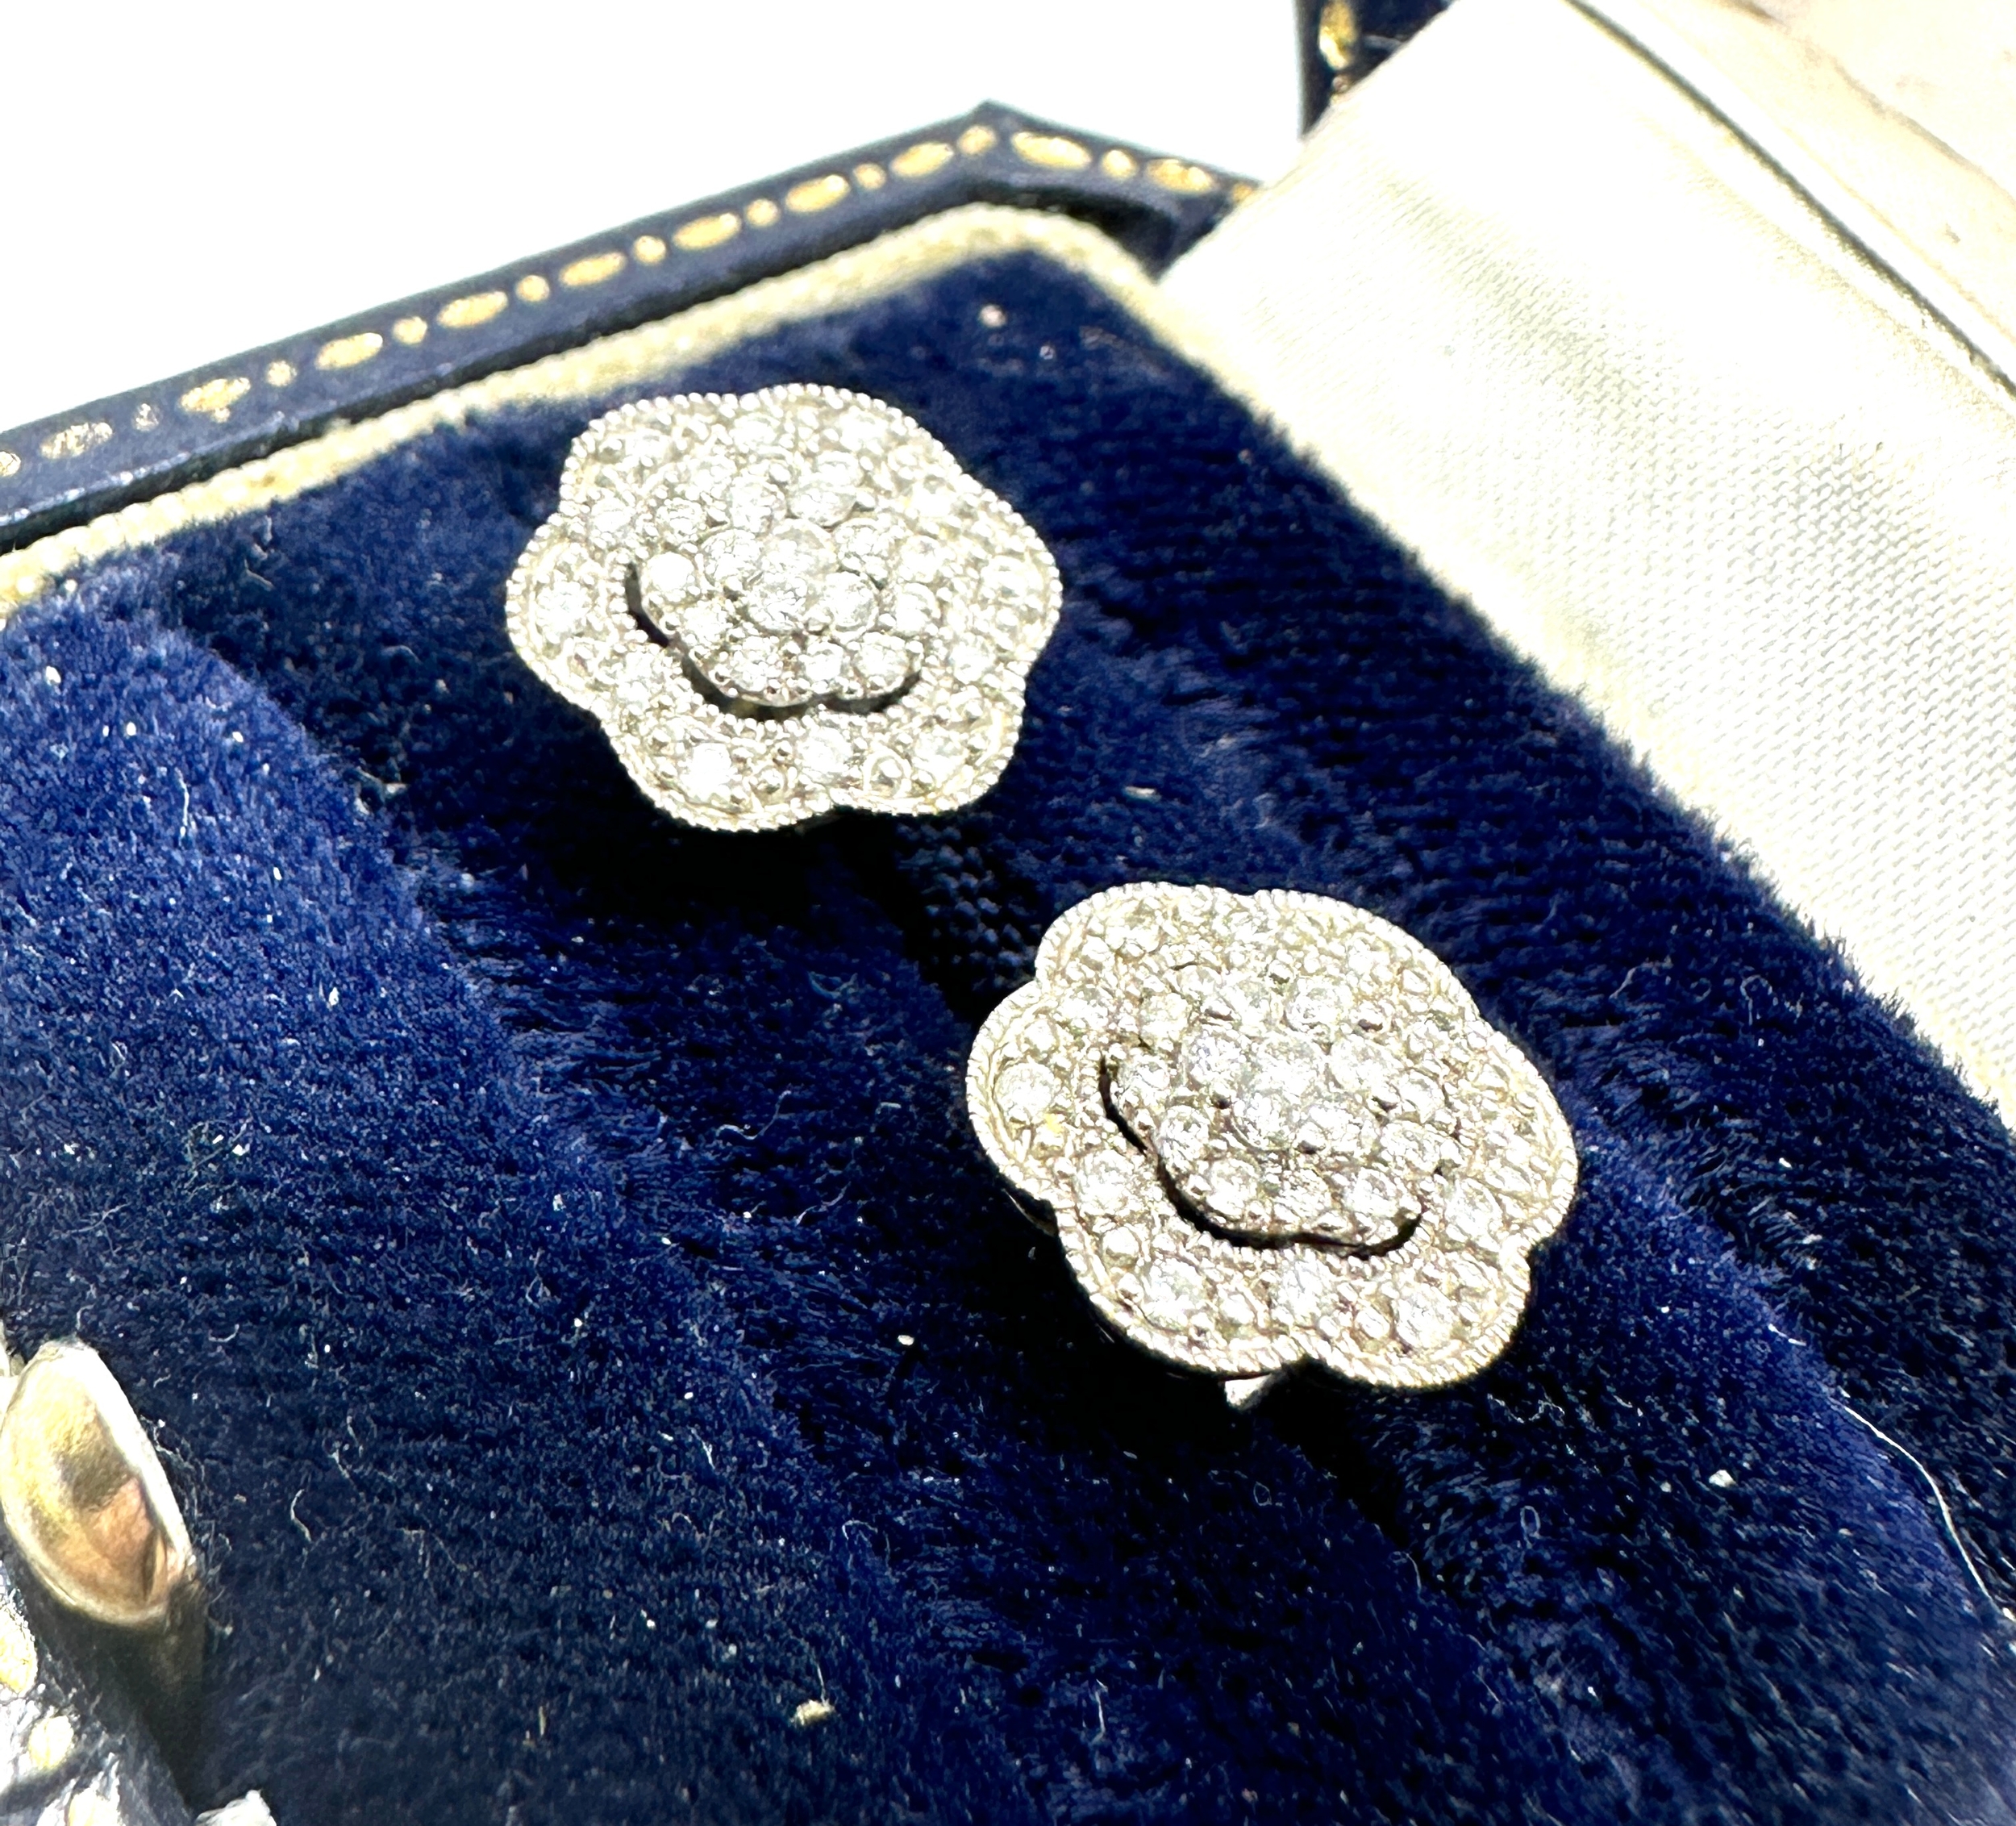 9ct gold diamond earrings .40ct diamonds weight 2.3g - Image 3 of 4